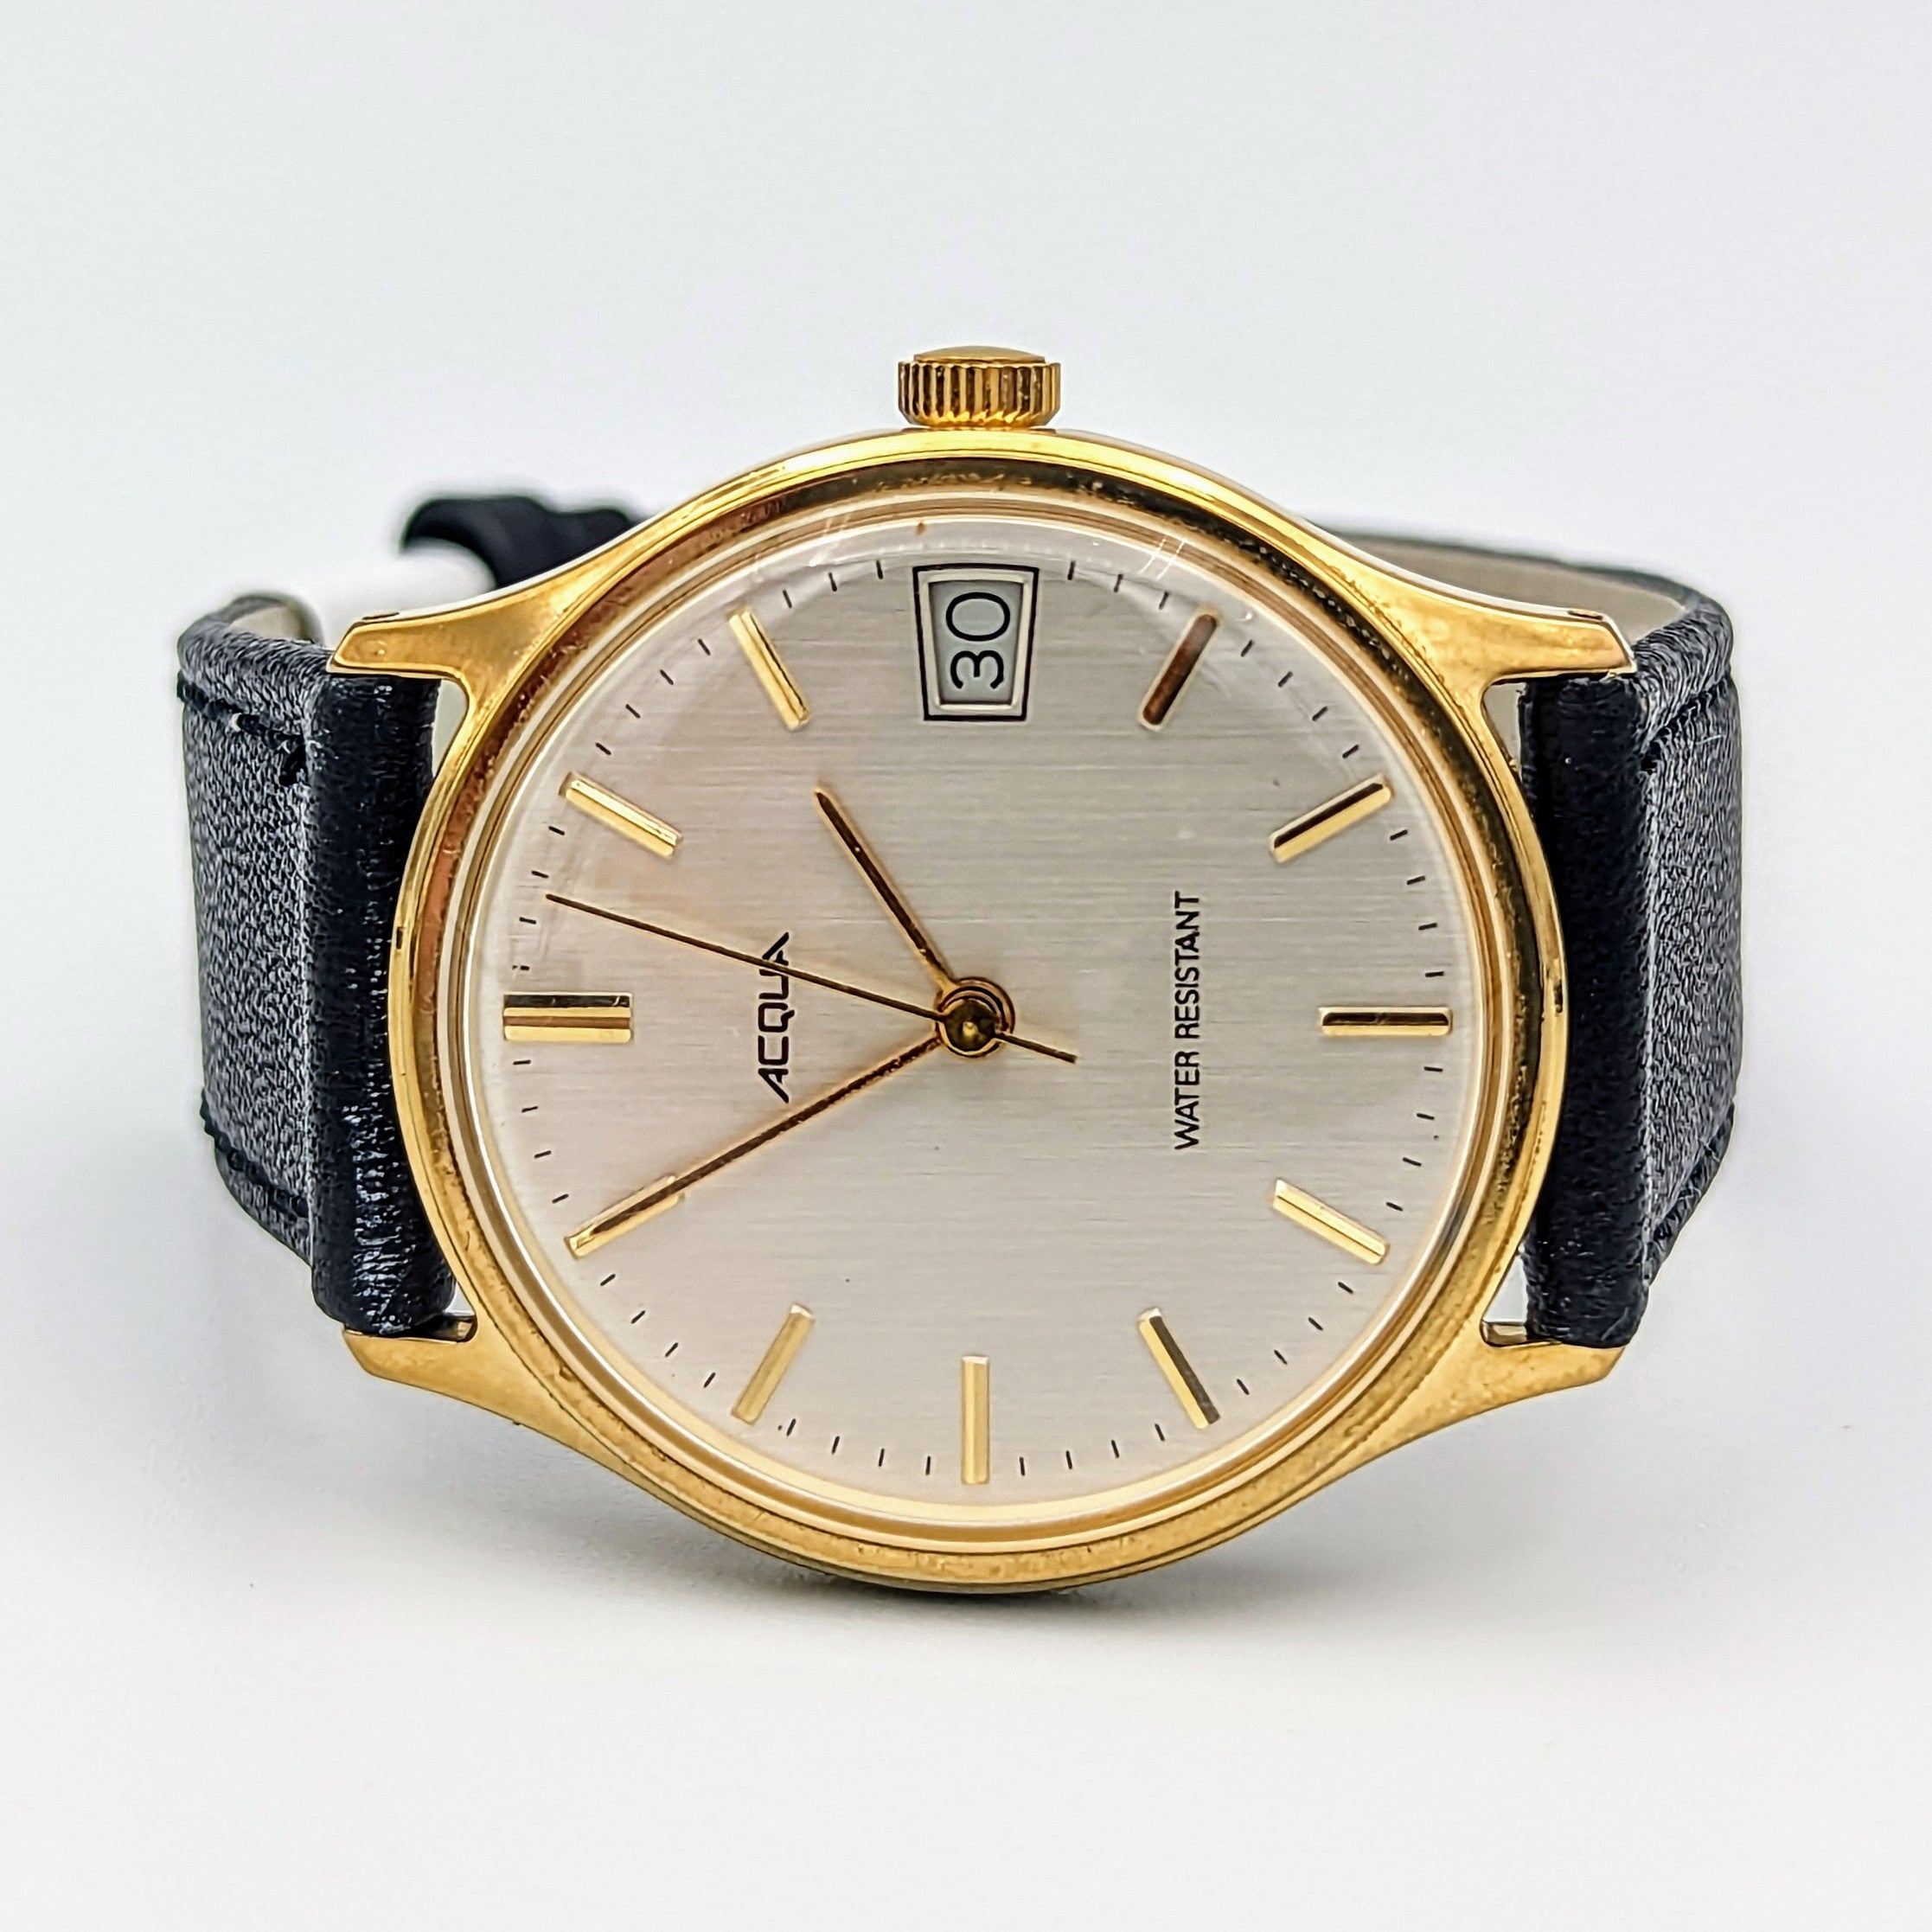 Timex ACQUA Mechanical Watch Date Indicator Vintage Wristwatch